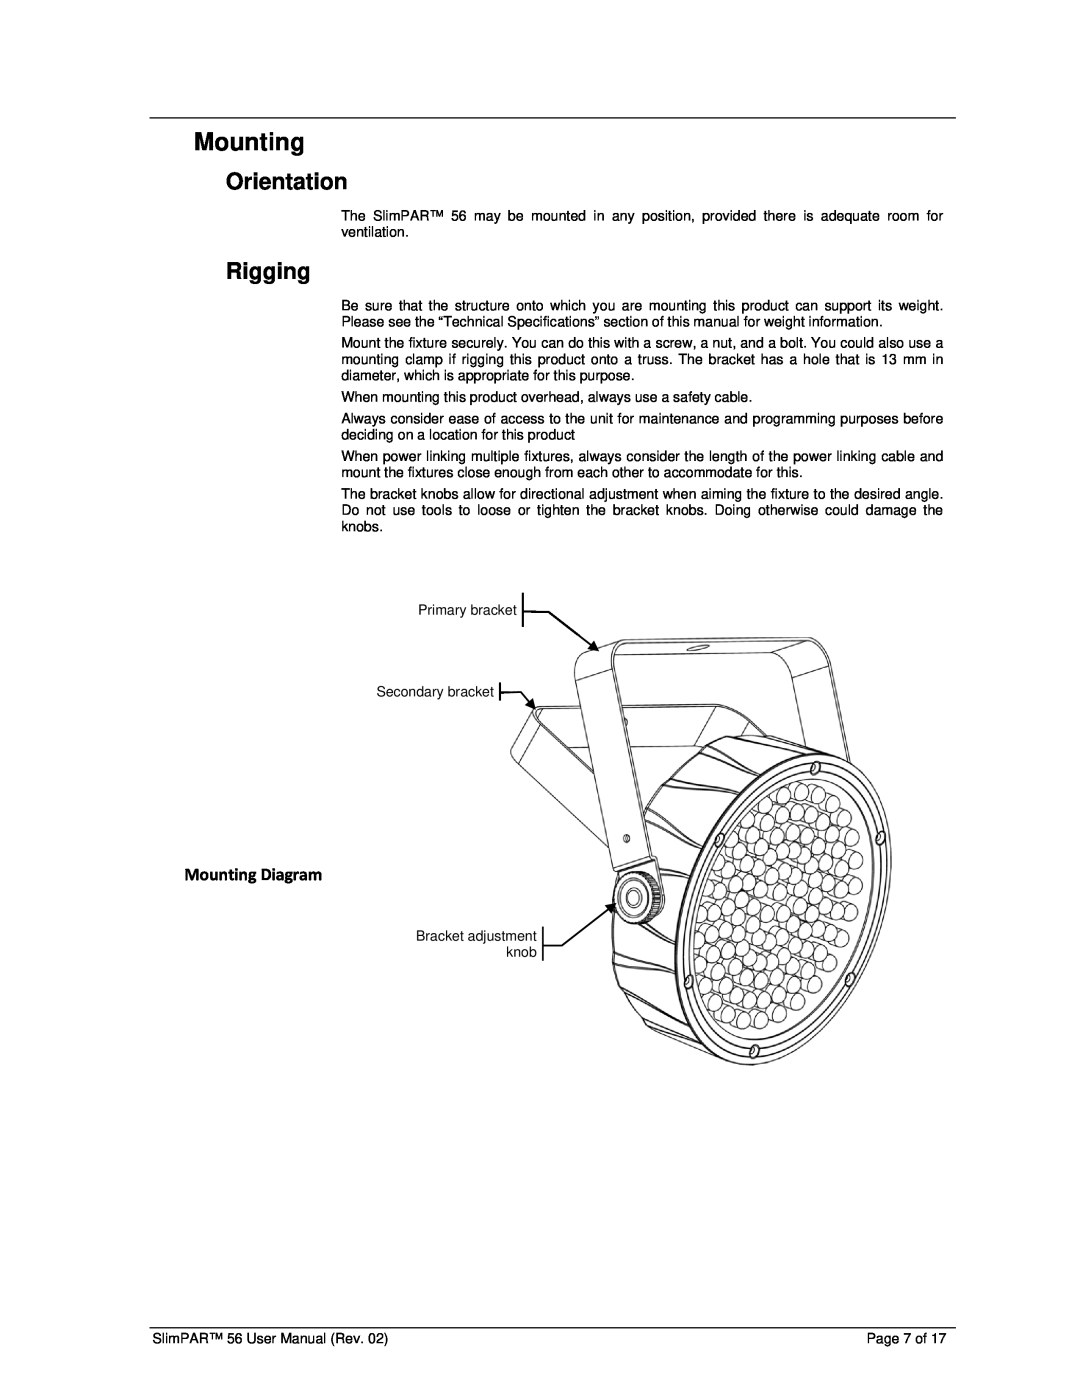 Chauvet 56 user manual Orientation, Rigging, Mounting Diagram 